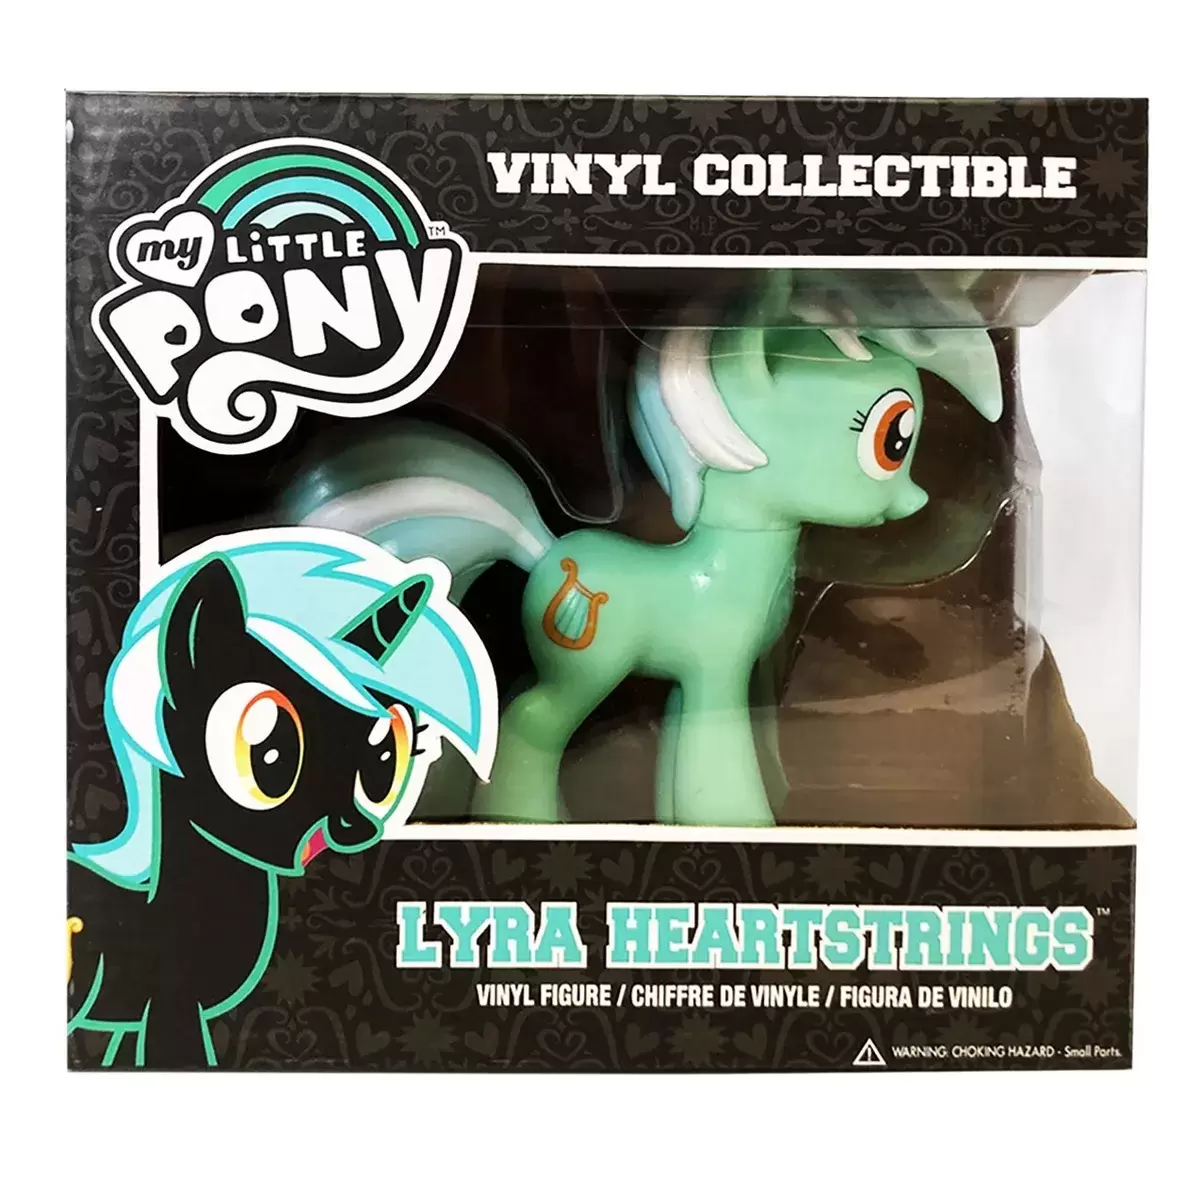 Vinyl Collectible - My Little Pony - Lyra Heartstrings